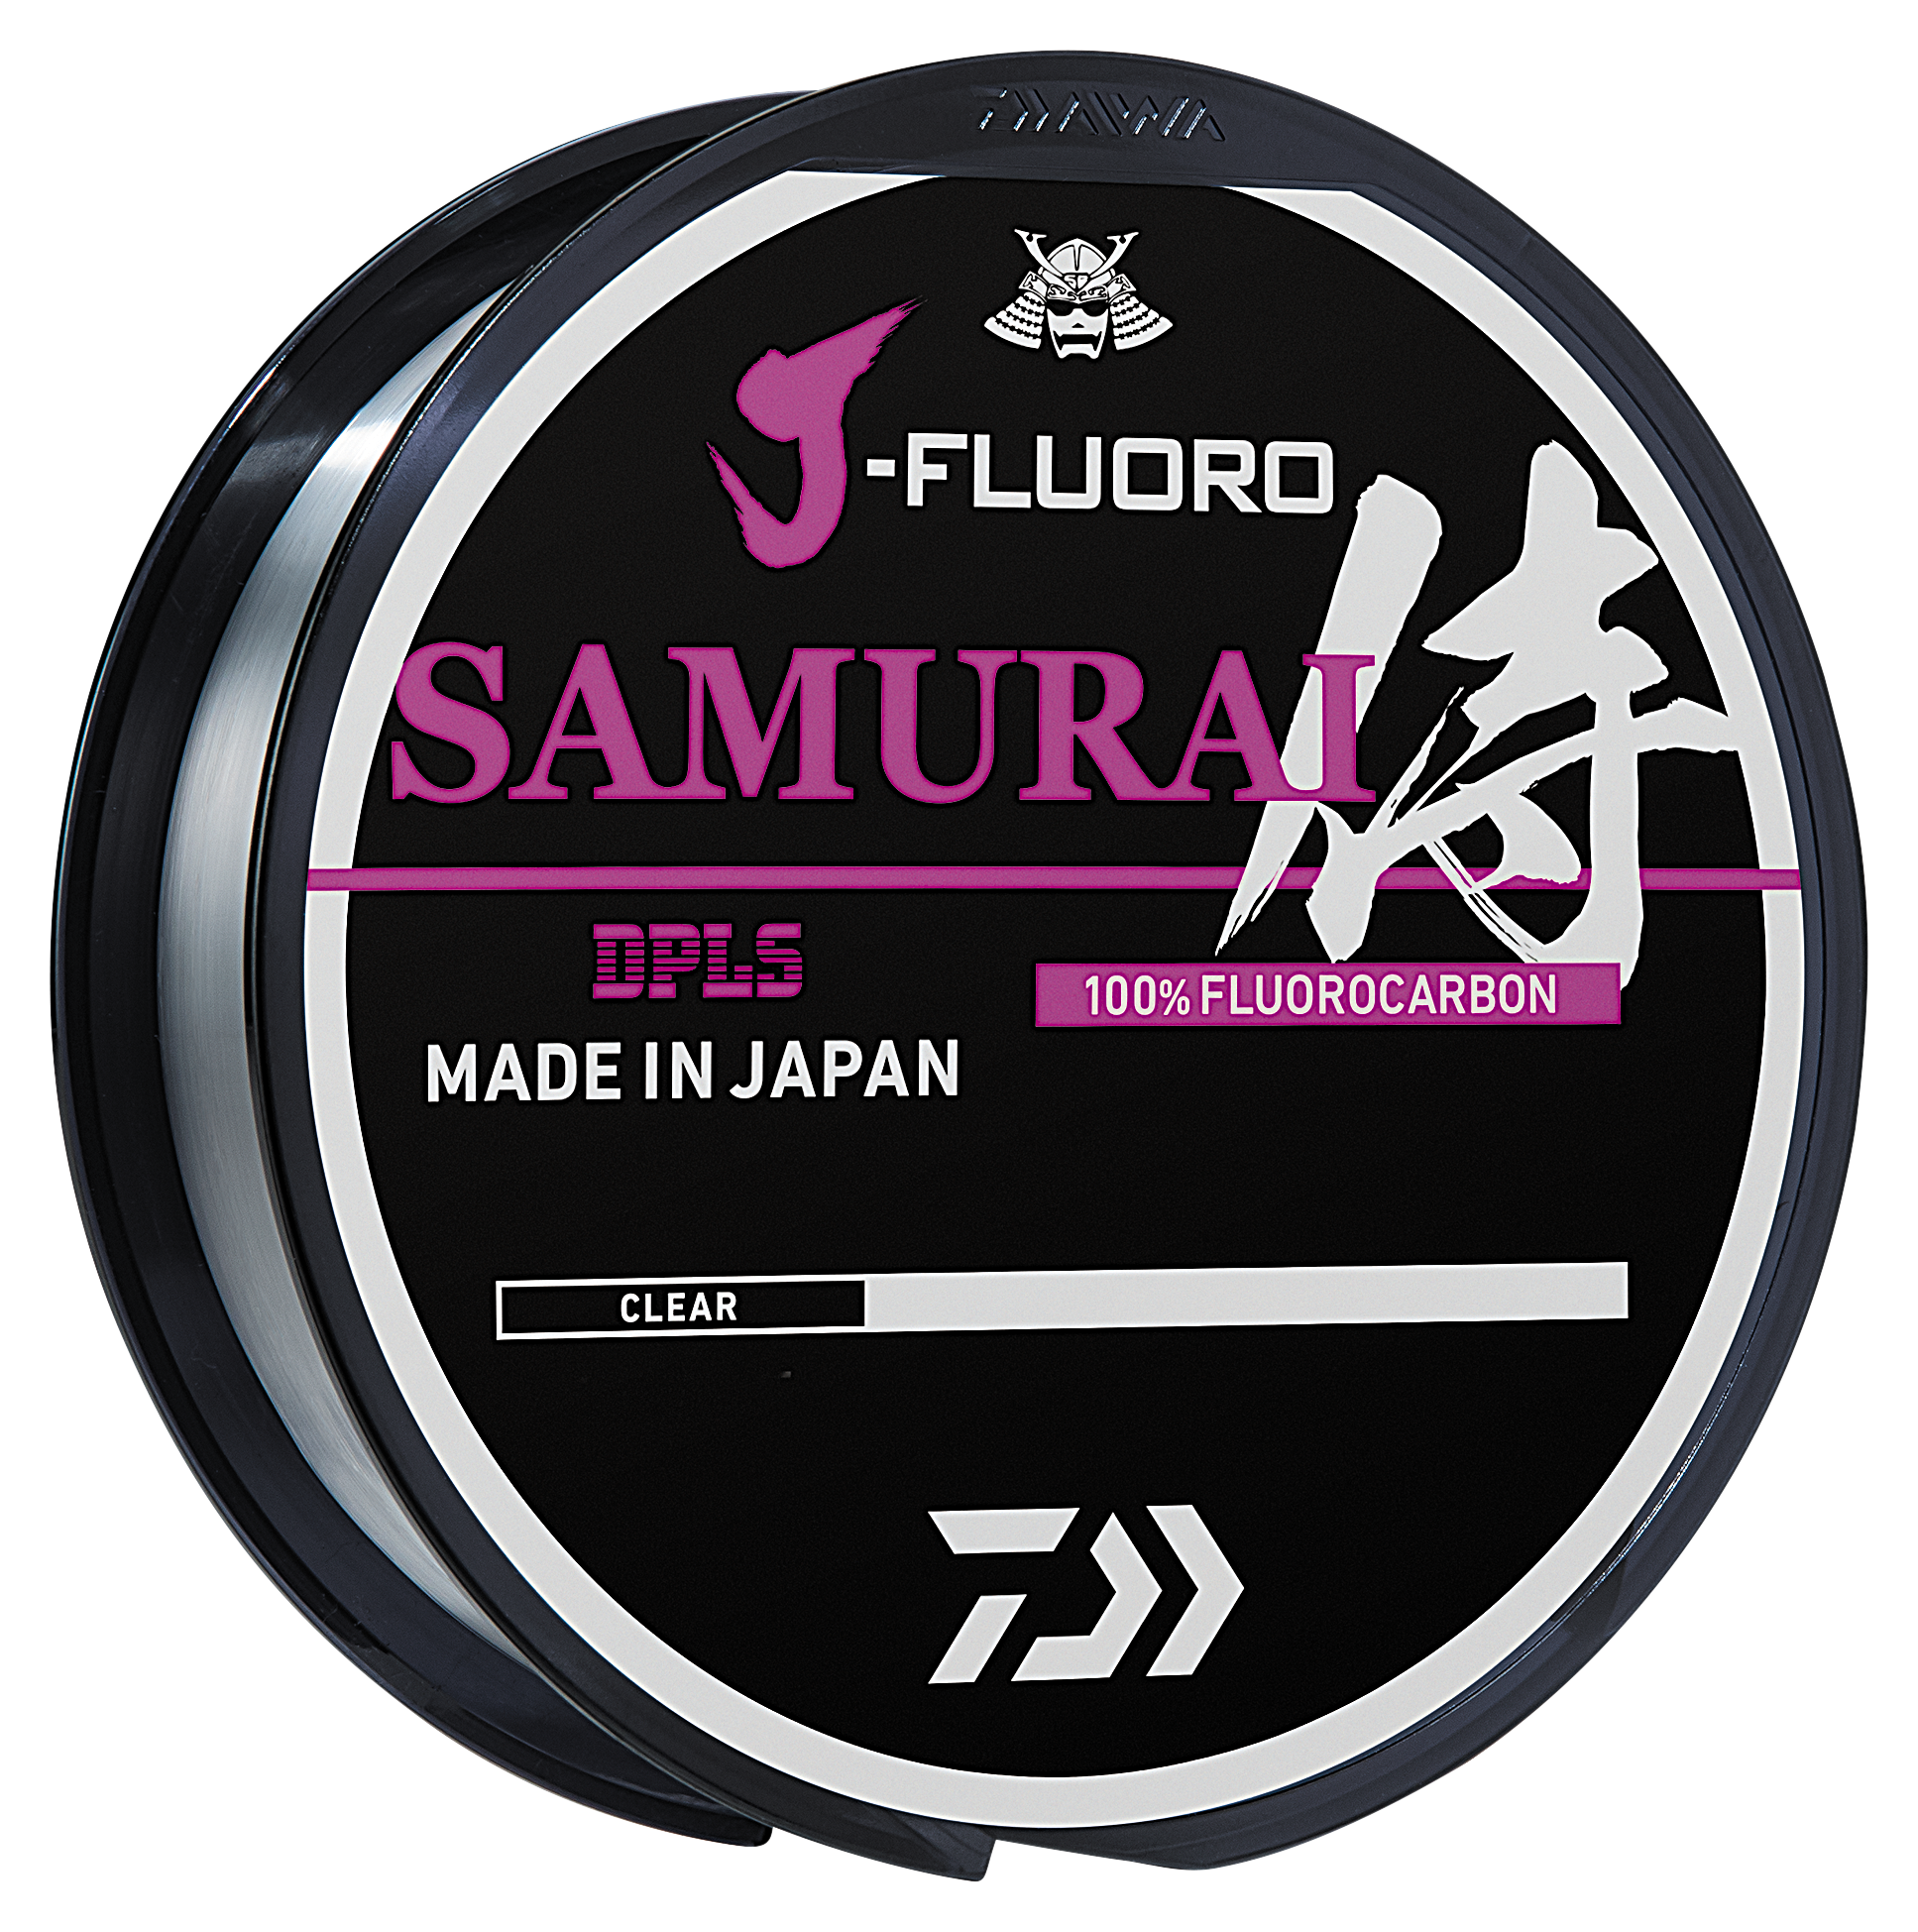 Daiwa J-Fluoro Samurai Fluorocarbon Fishing Line